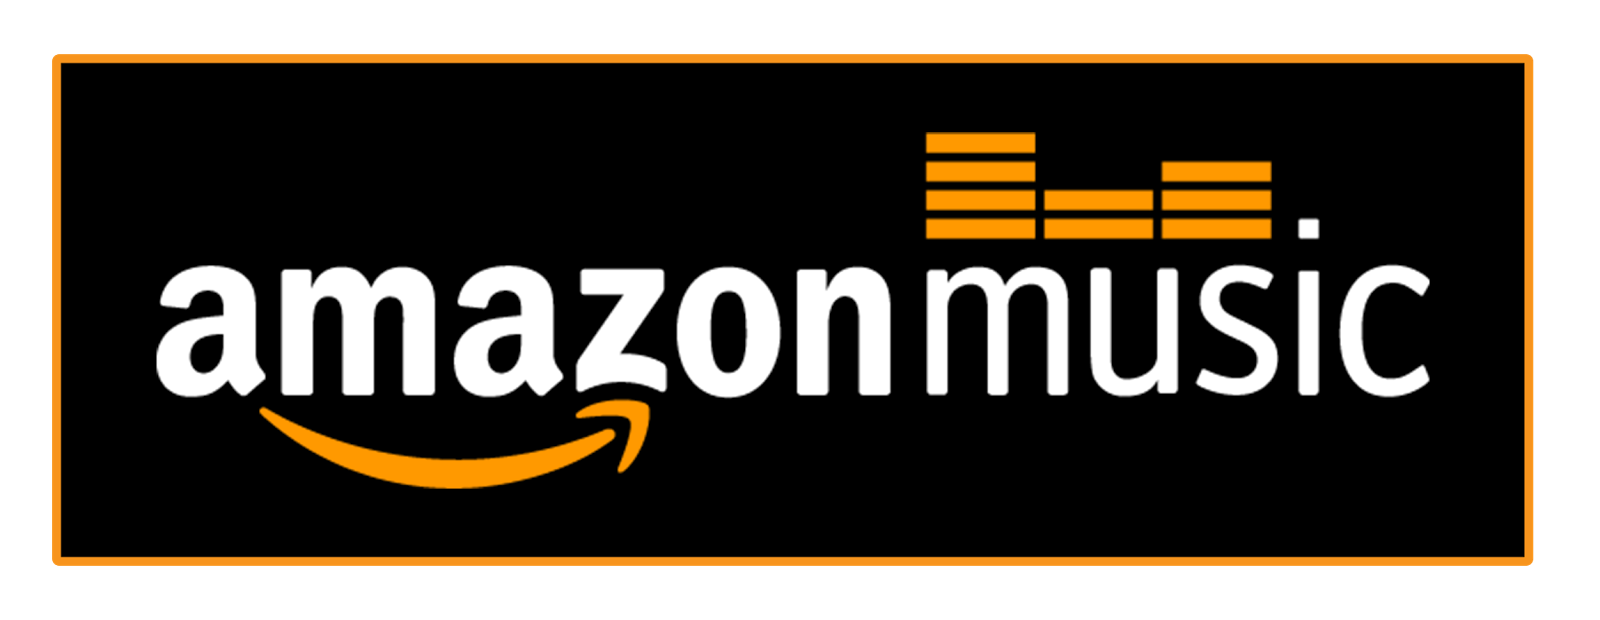 Amazon Music Logo - Amazon Music Logo Transparent & PNG Clipart Free Download - YWD